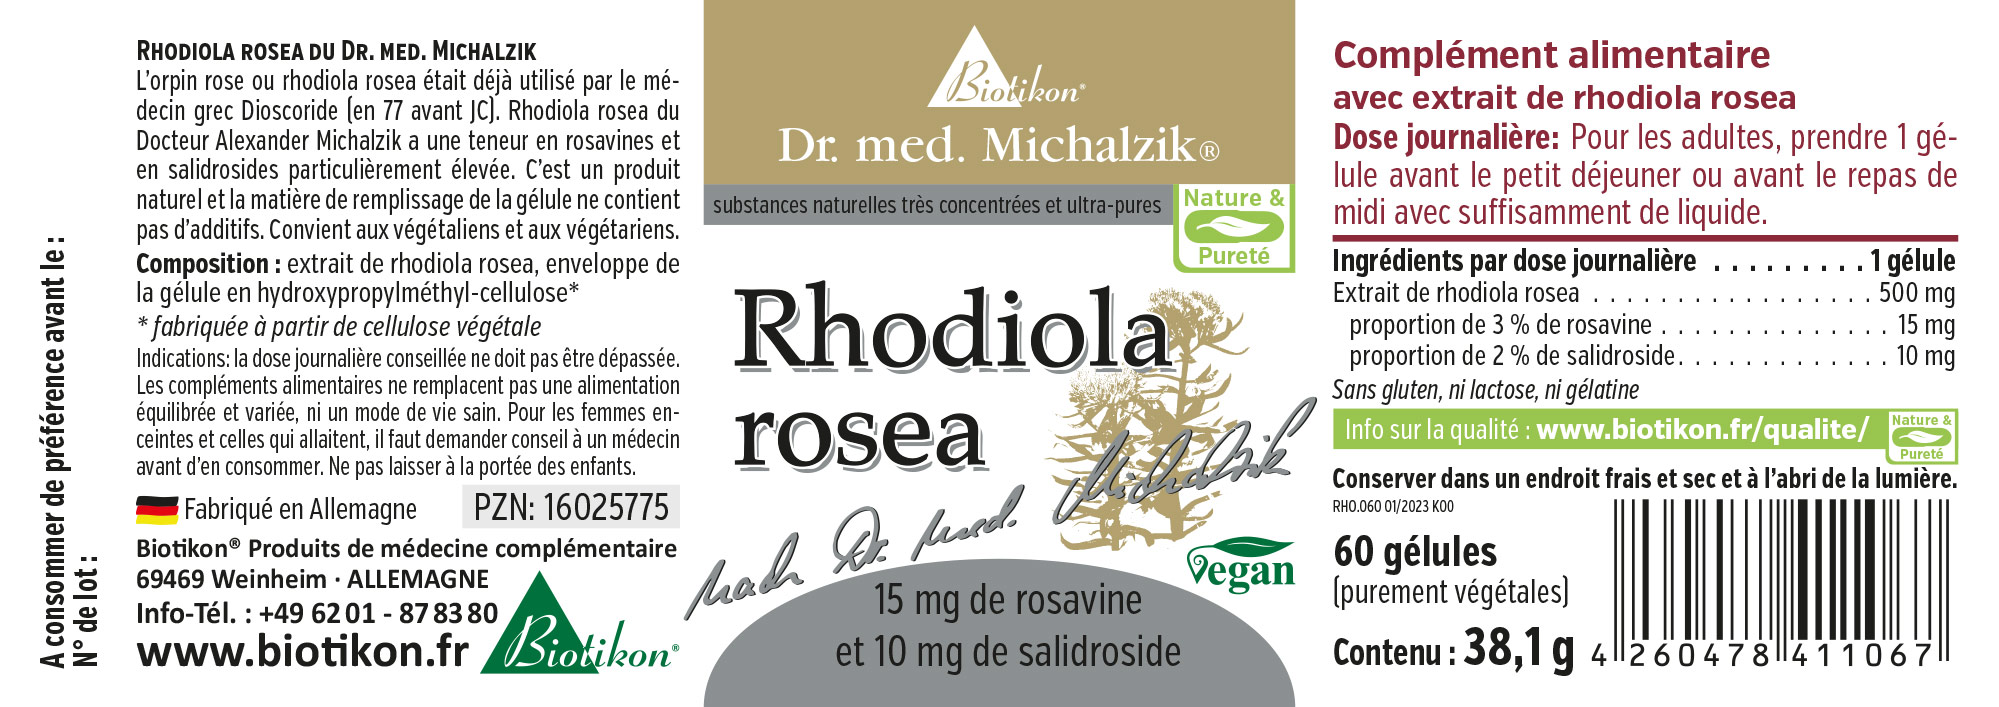 Rhodiola rosea